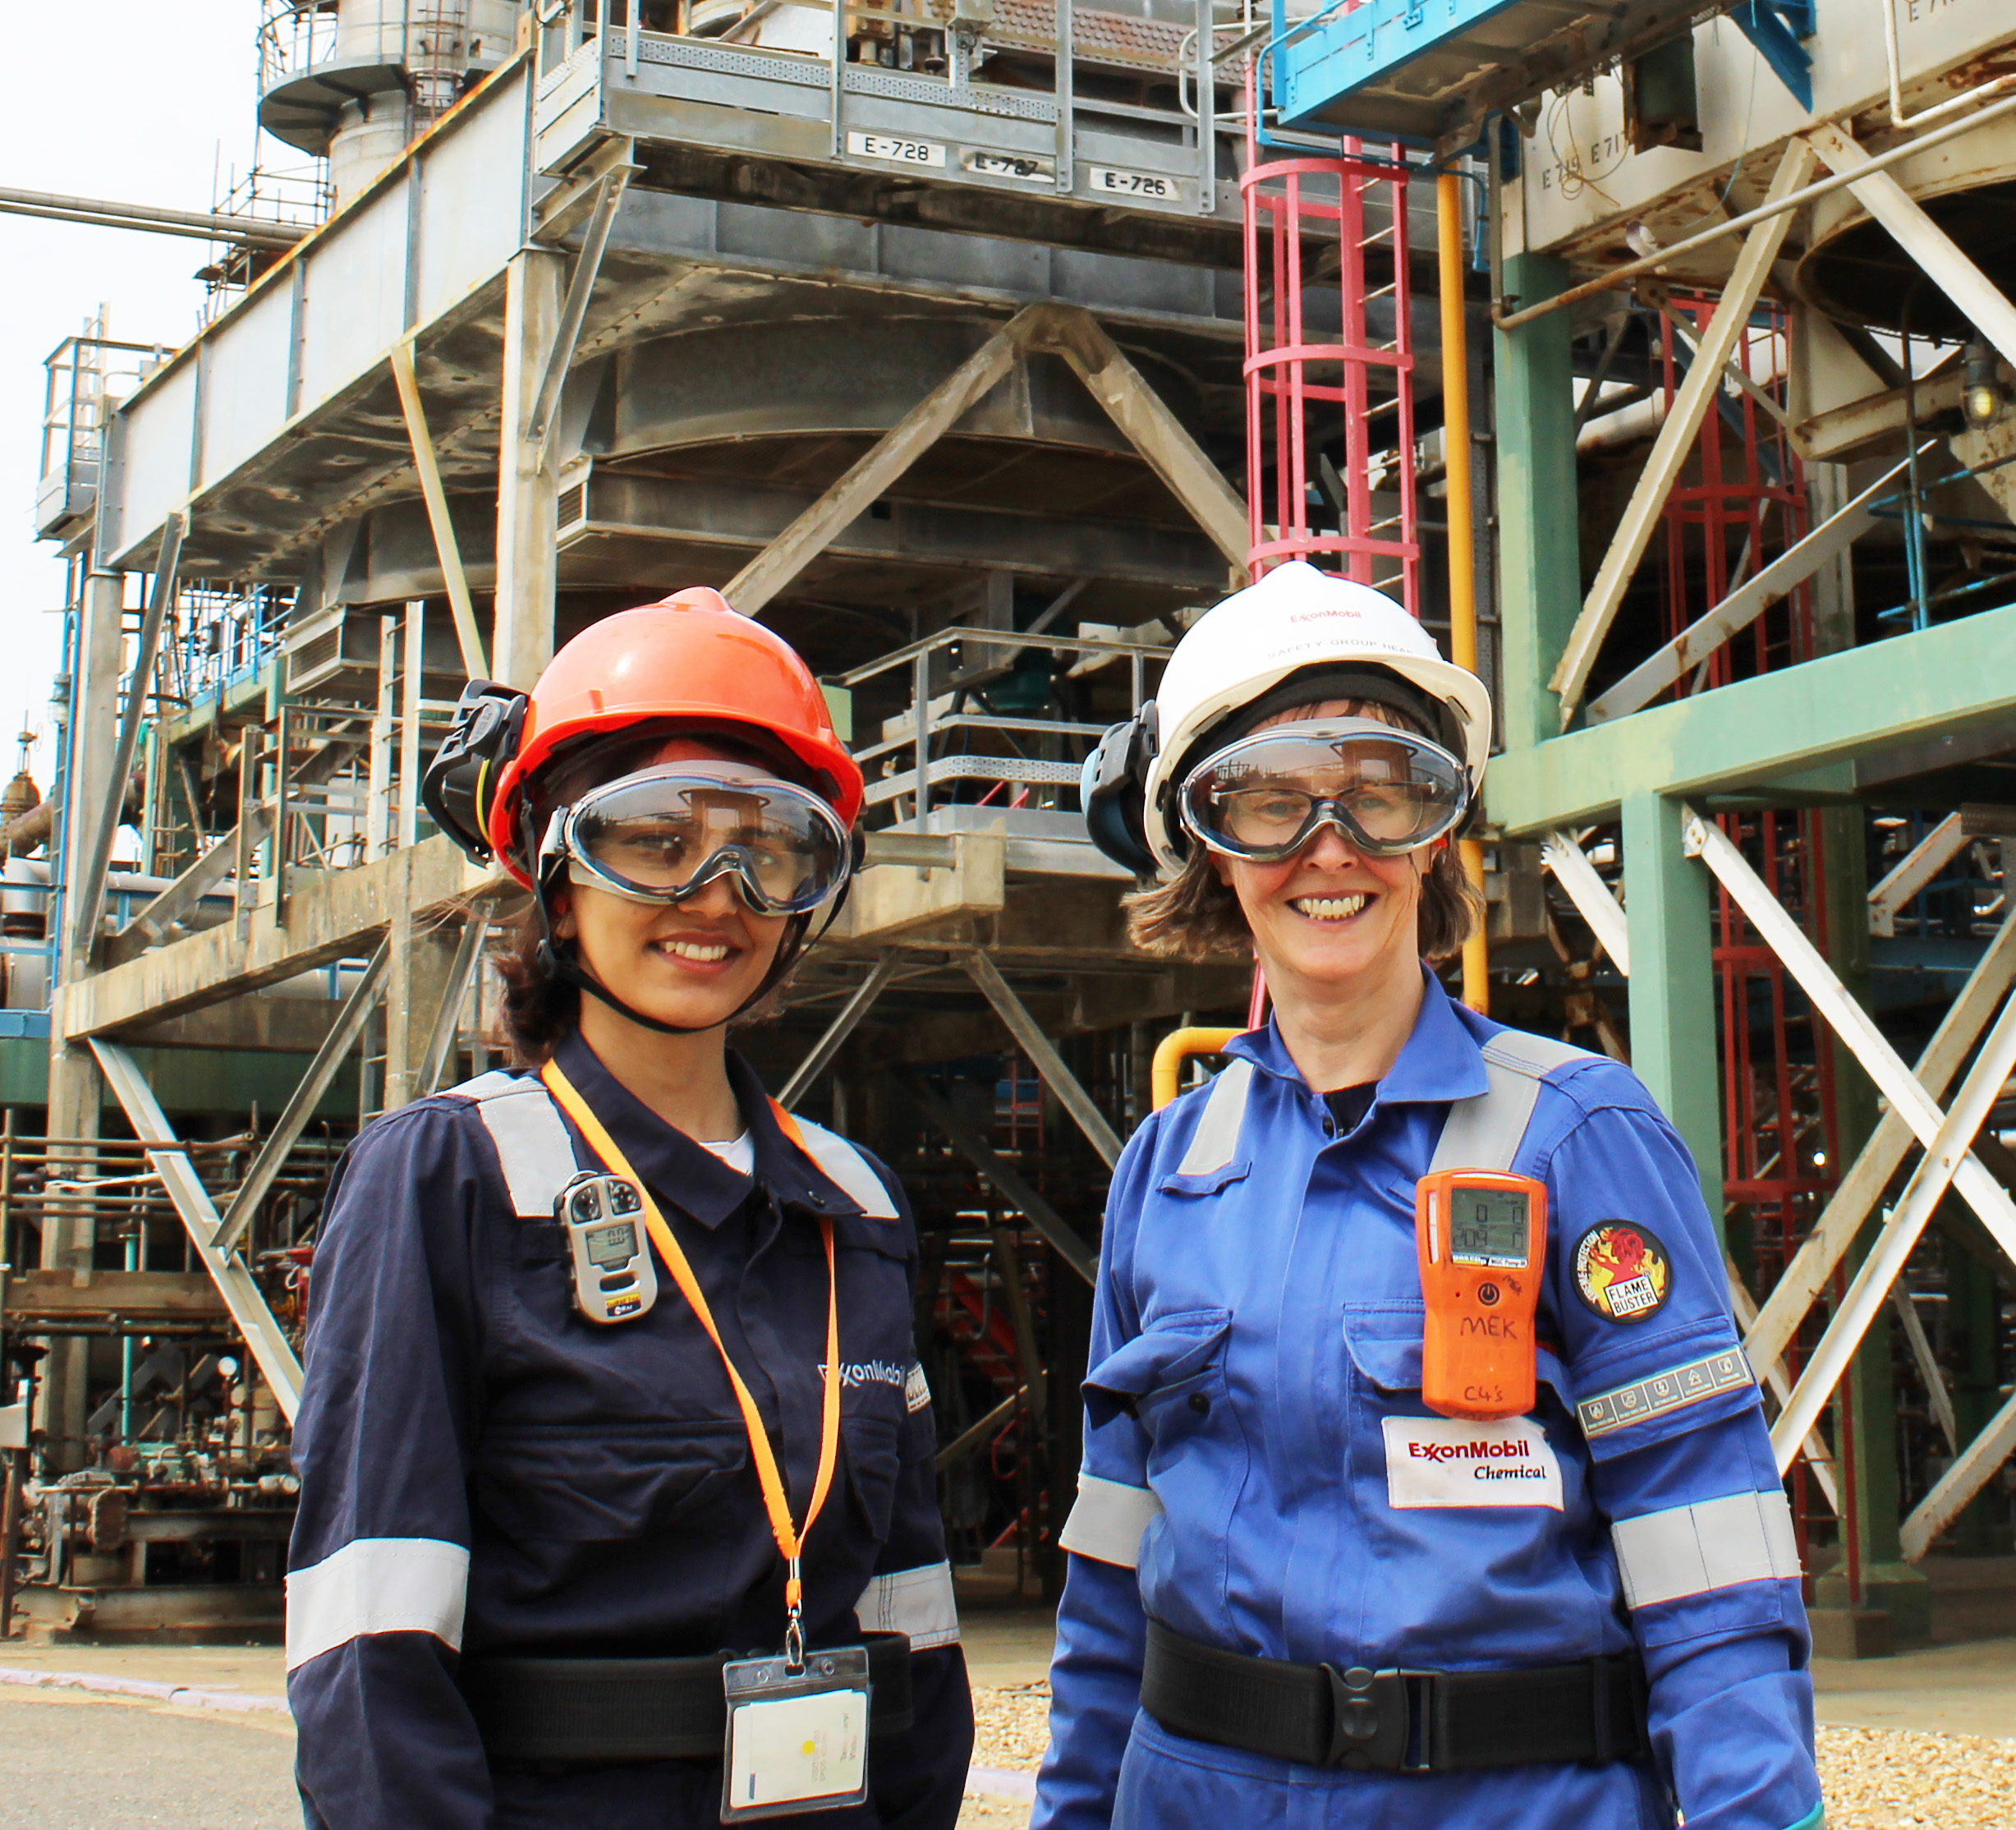 Image Amanda Bones, Principal Engineer at ExxonMobil
Fawley with MSc student Rakshitha Srinivasan